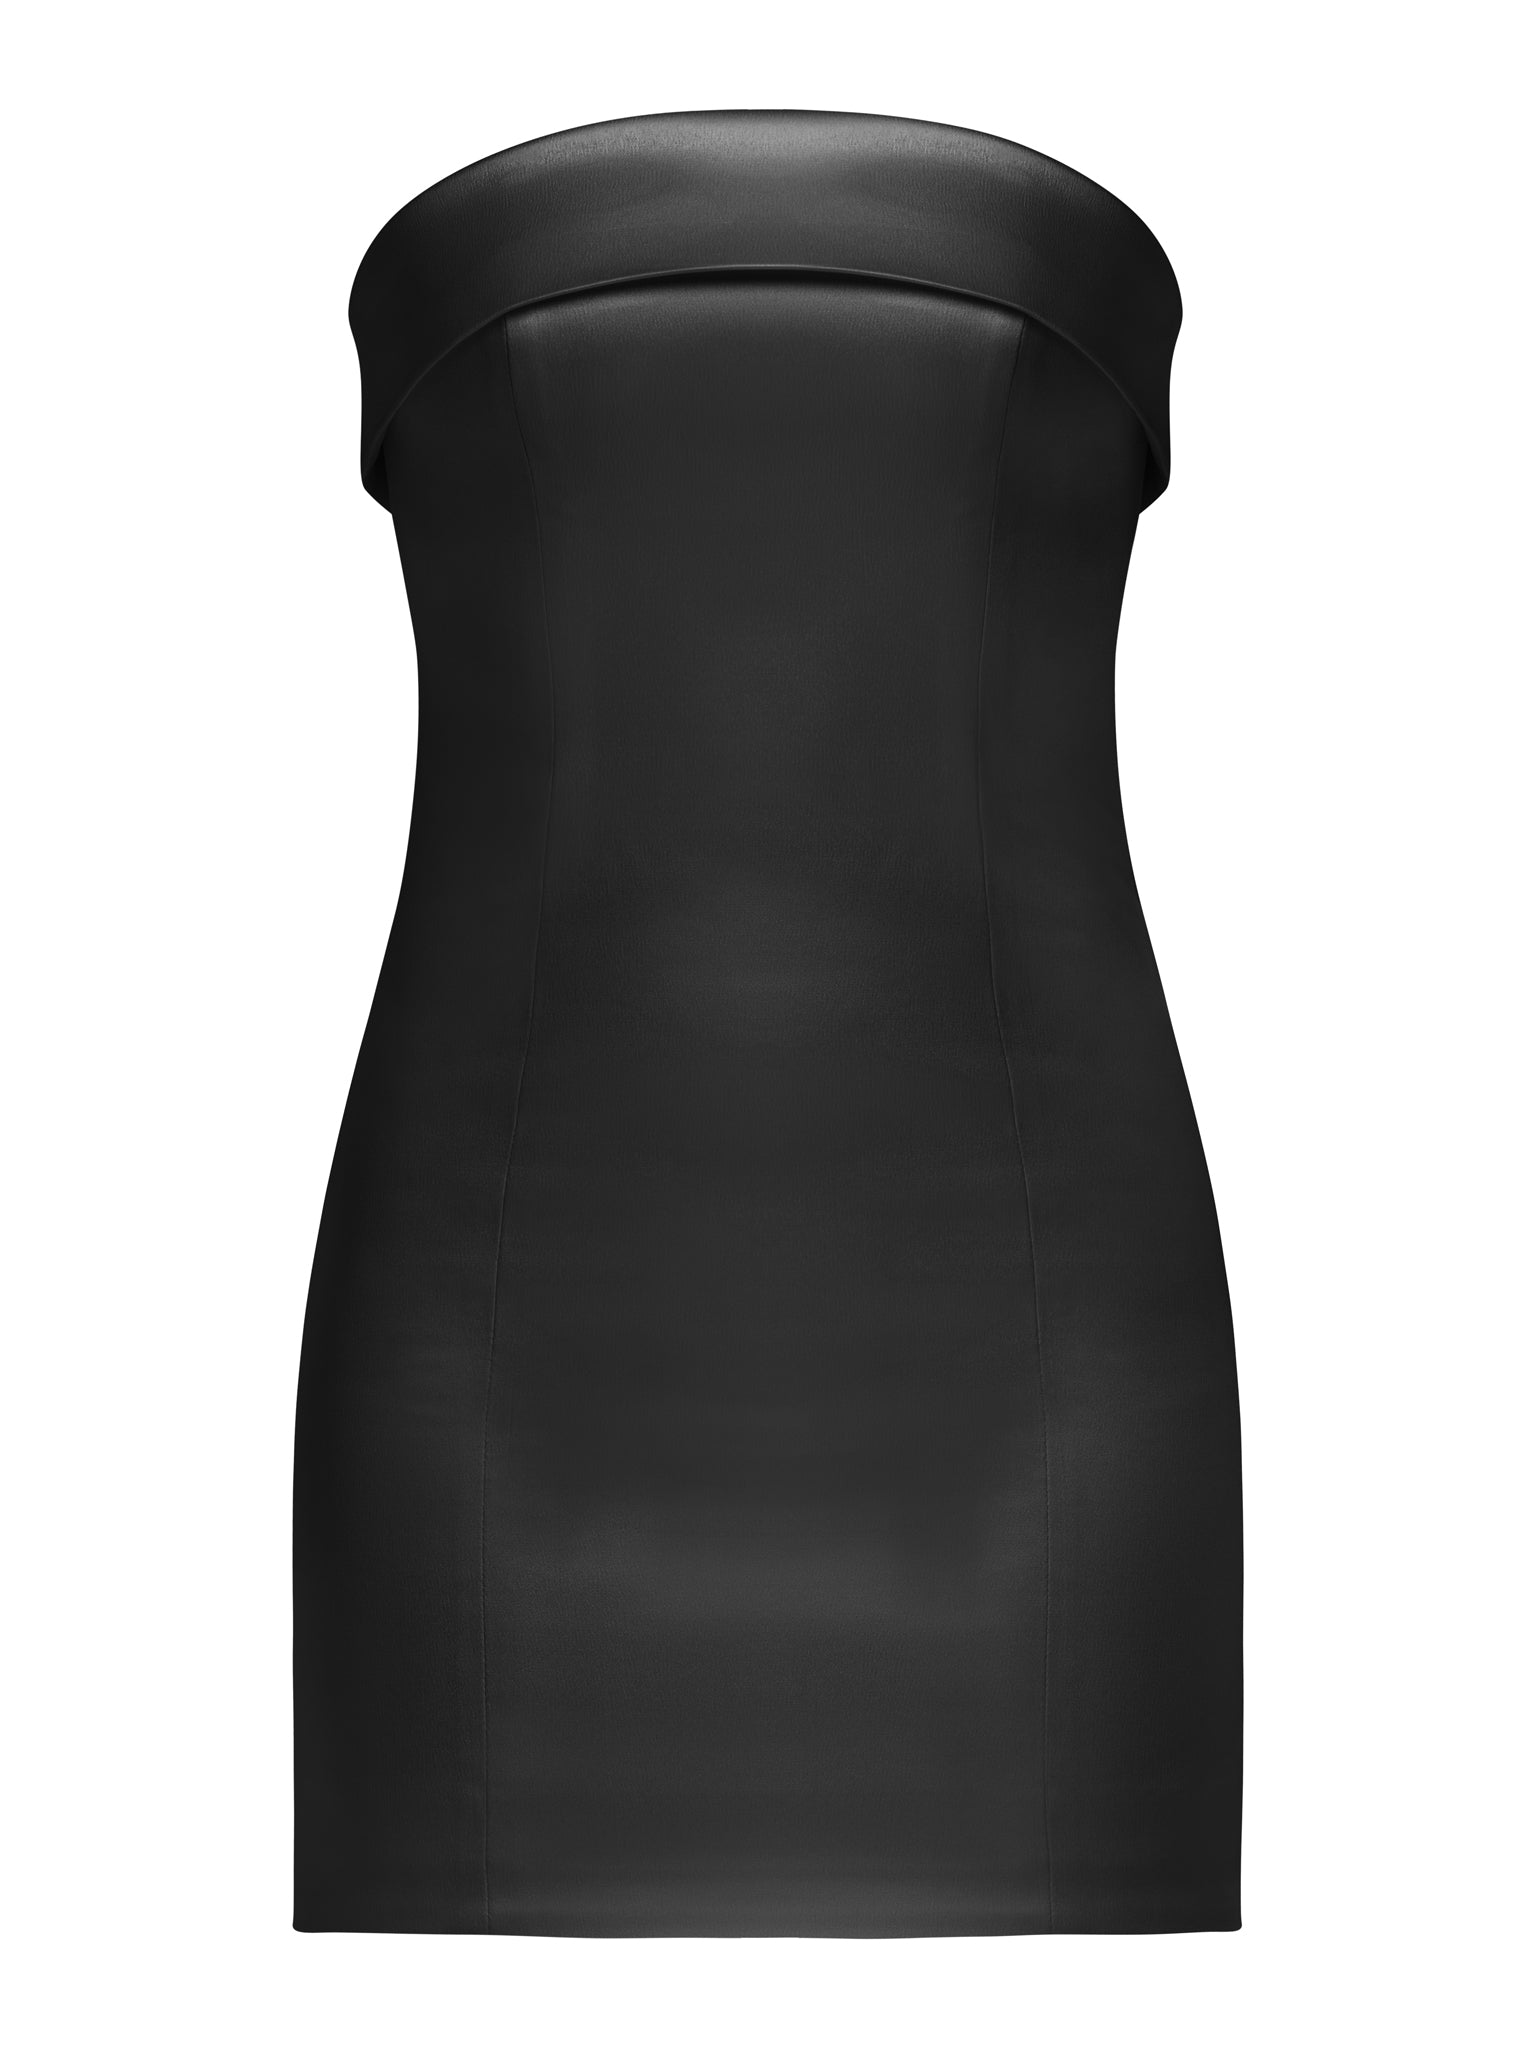 Romantic Allure Satin Mini Dress - Black by Tia Dorraine Women's Luxury Fashion Designer Clothing Brand